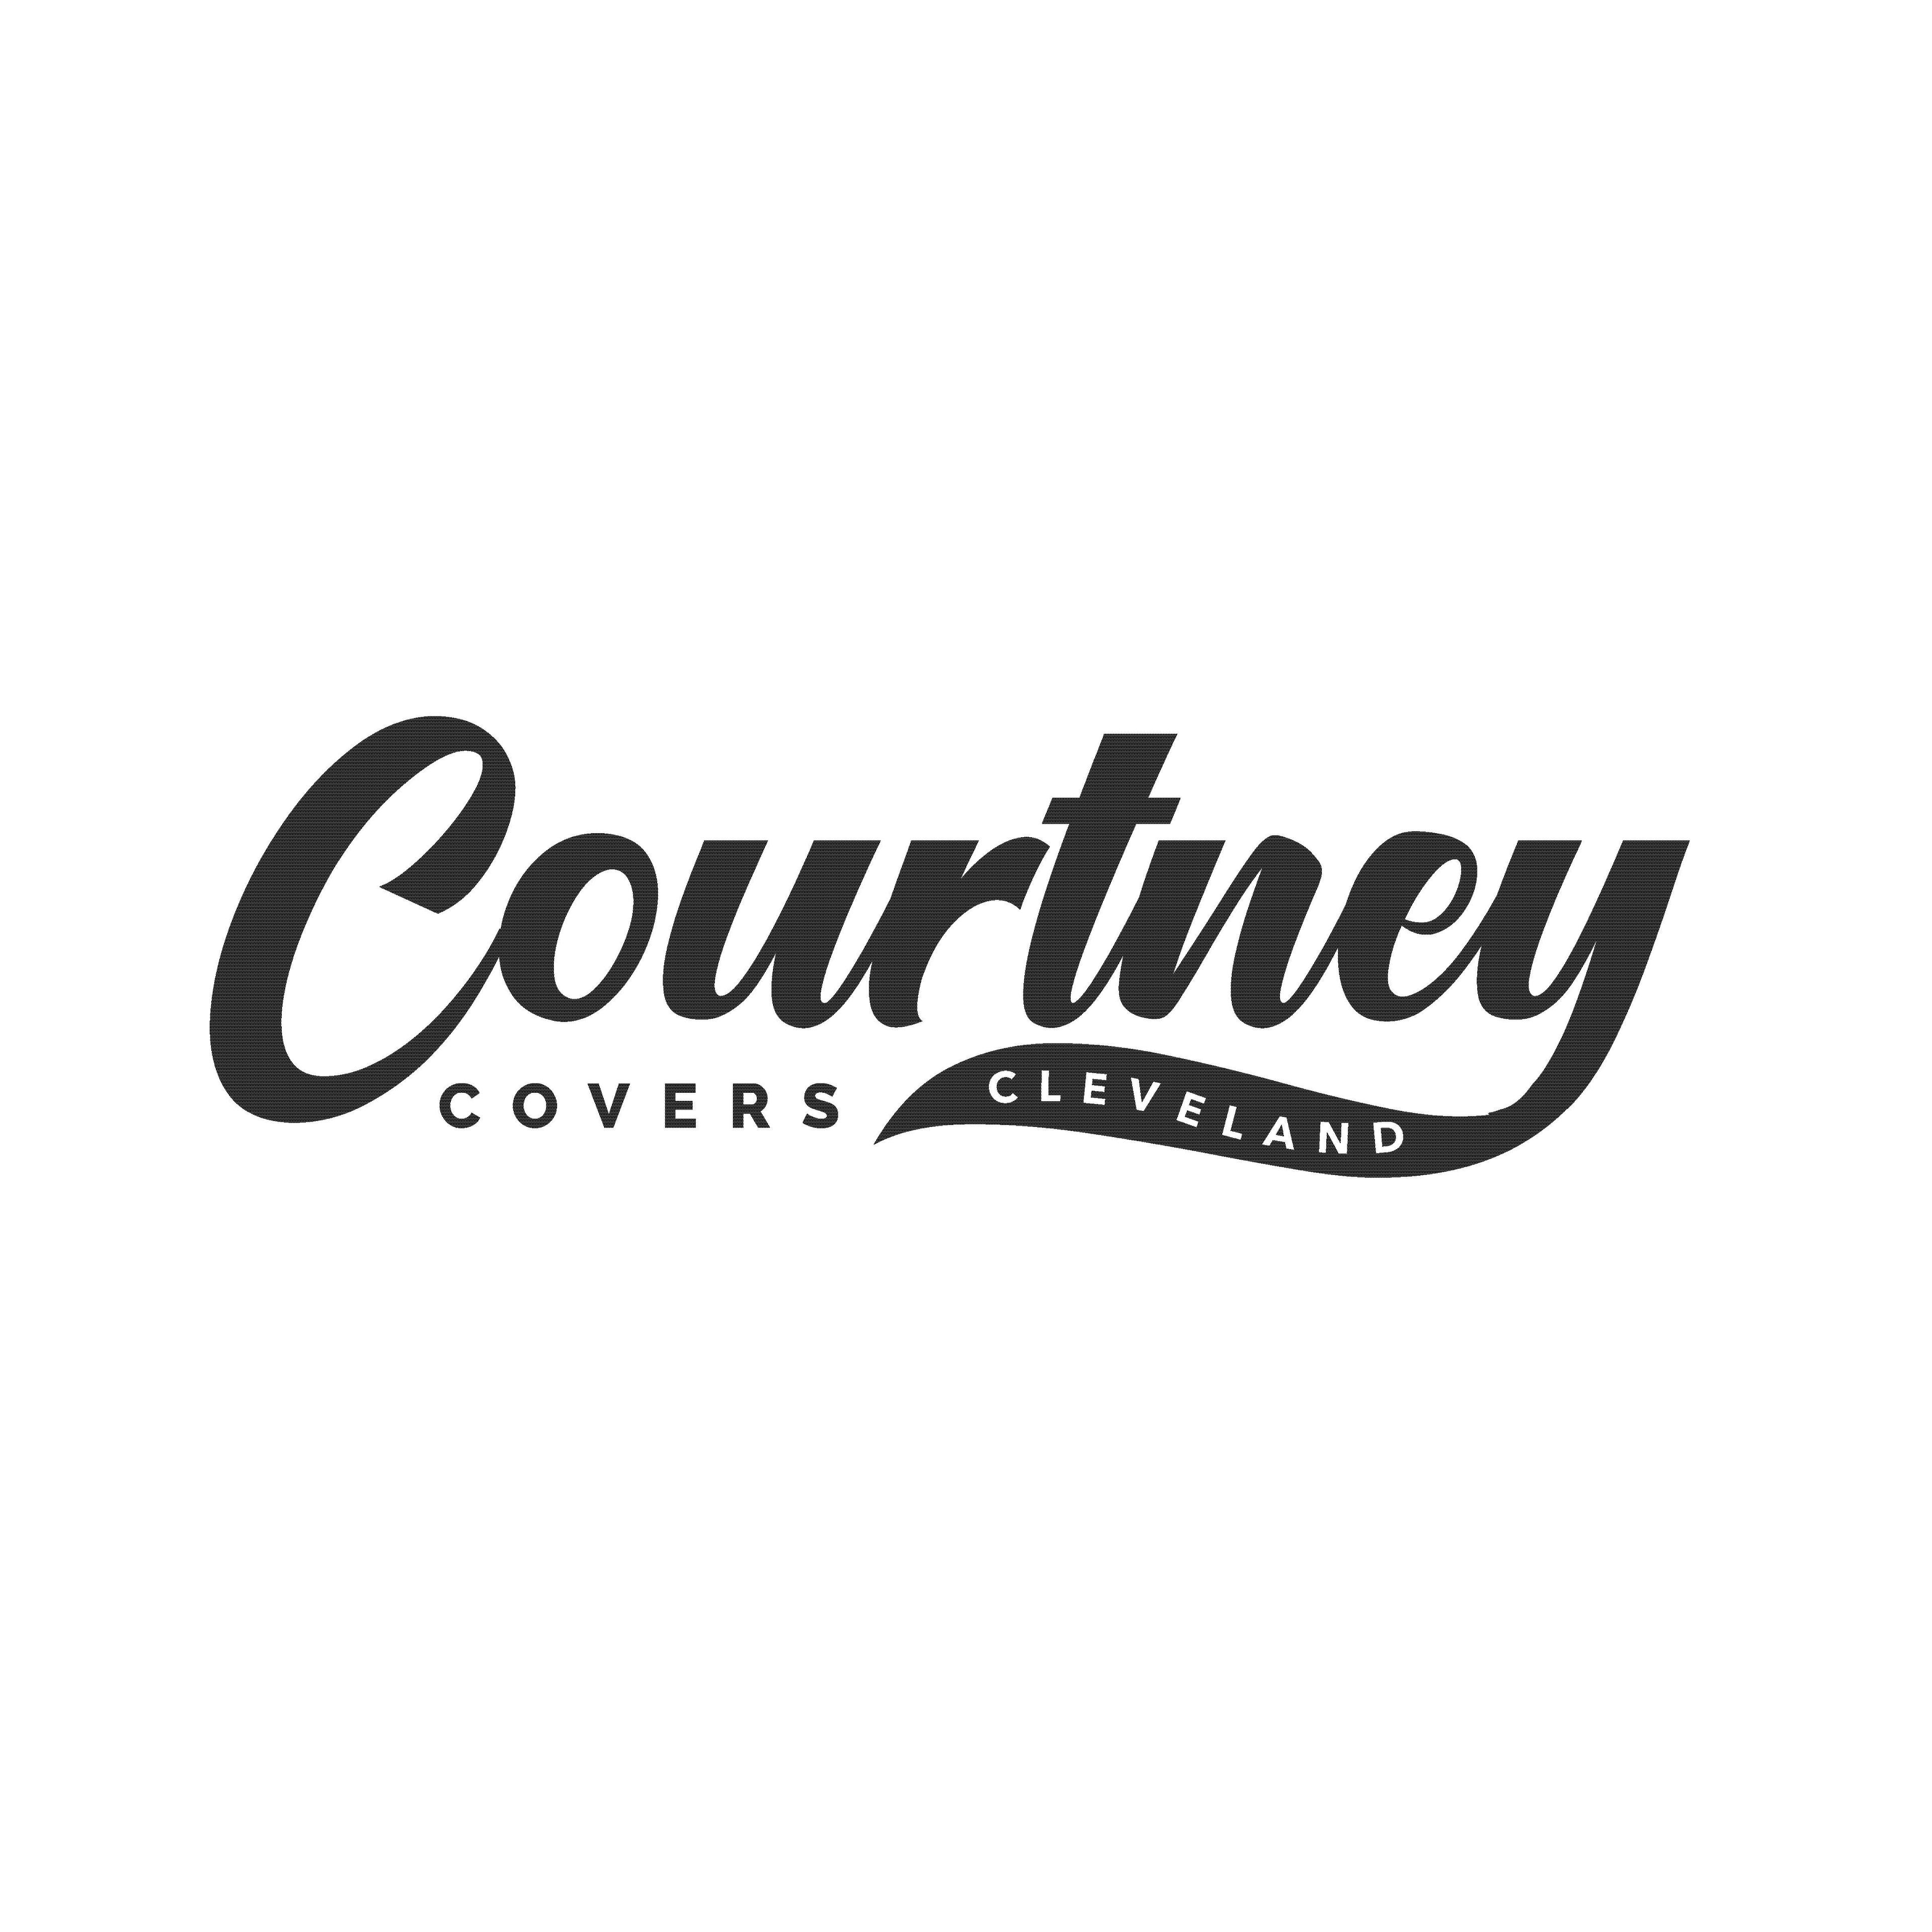 Courtney Covers Cleveland logo